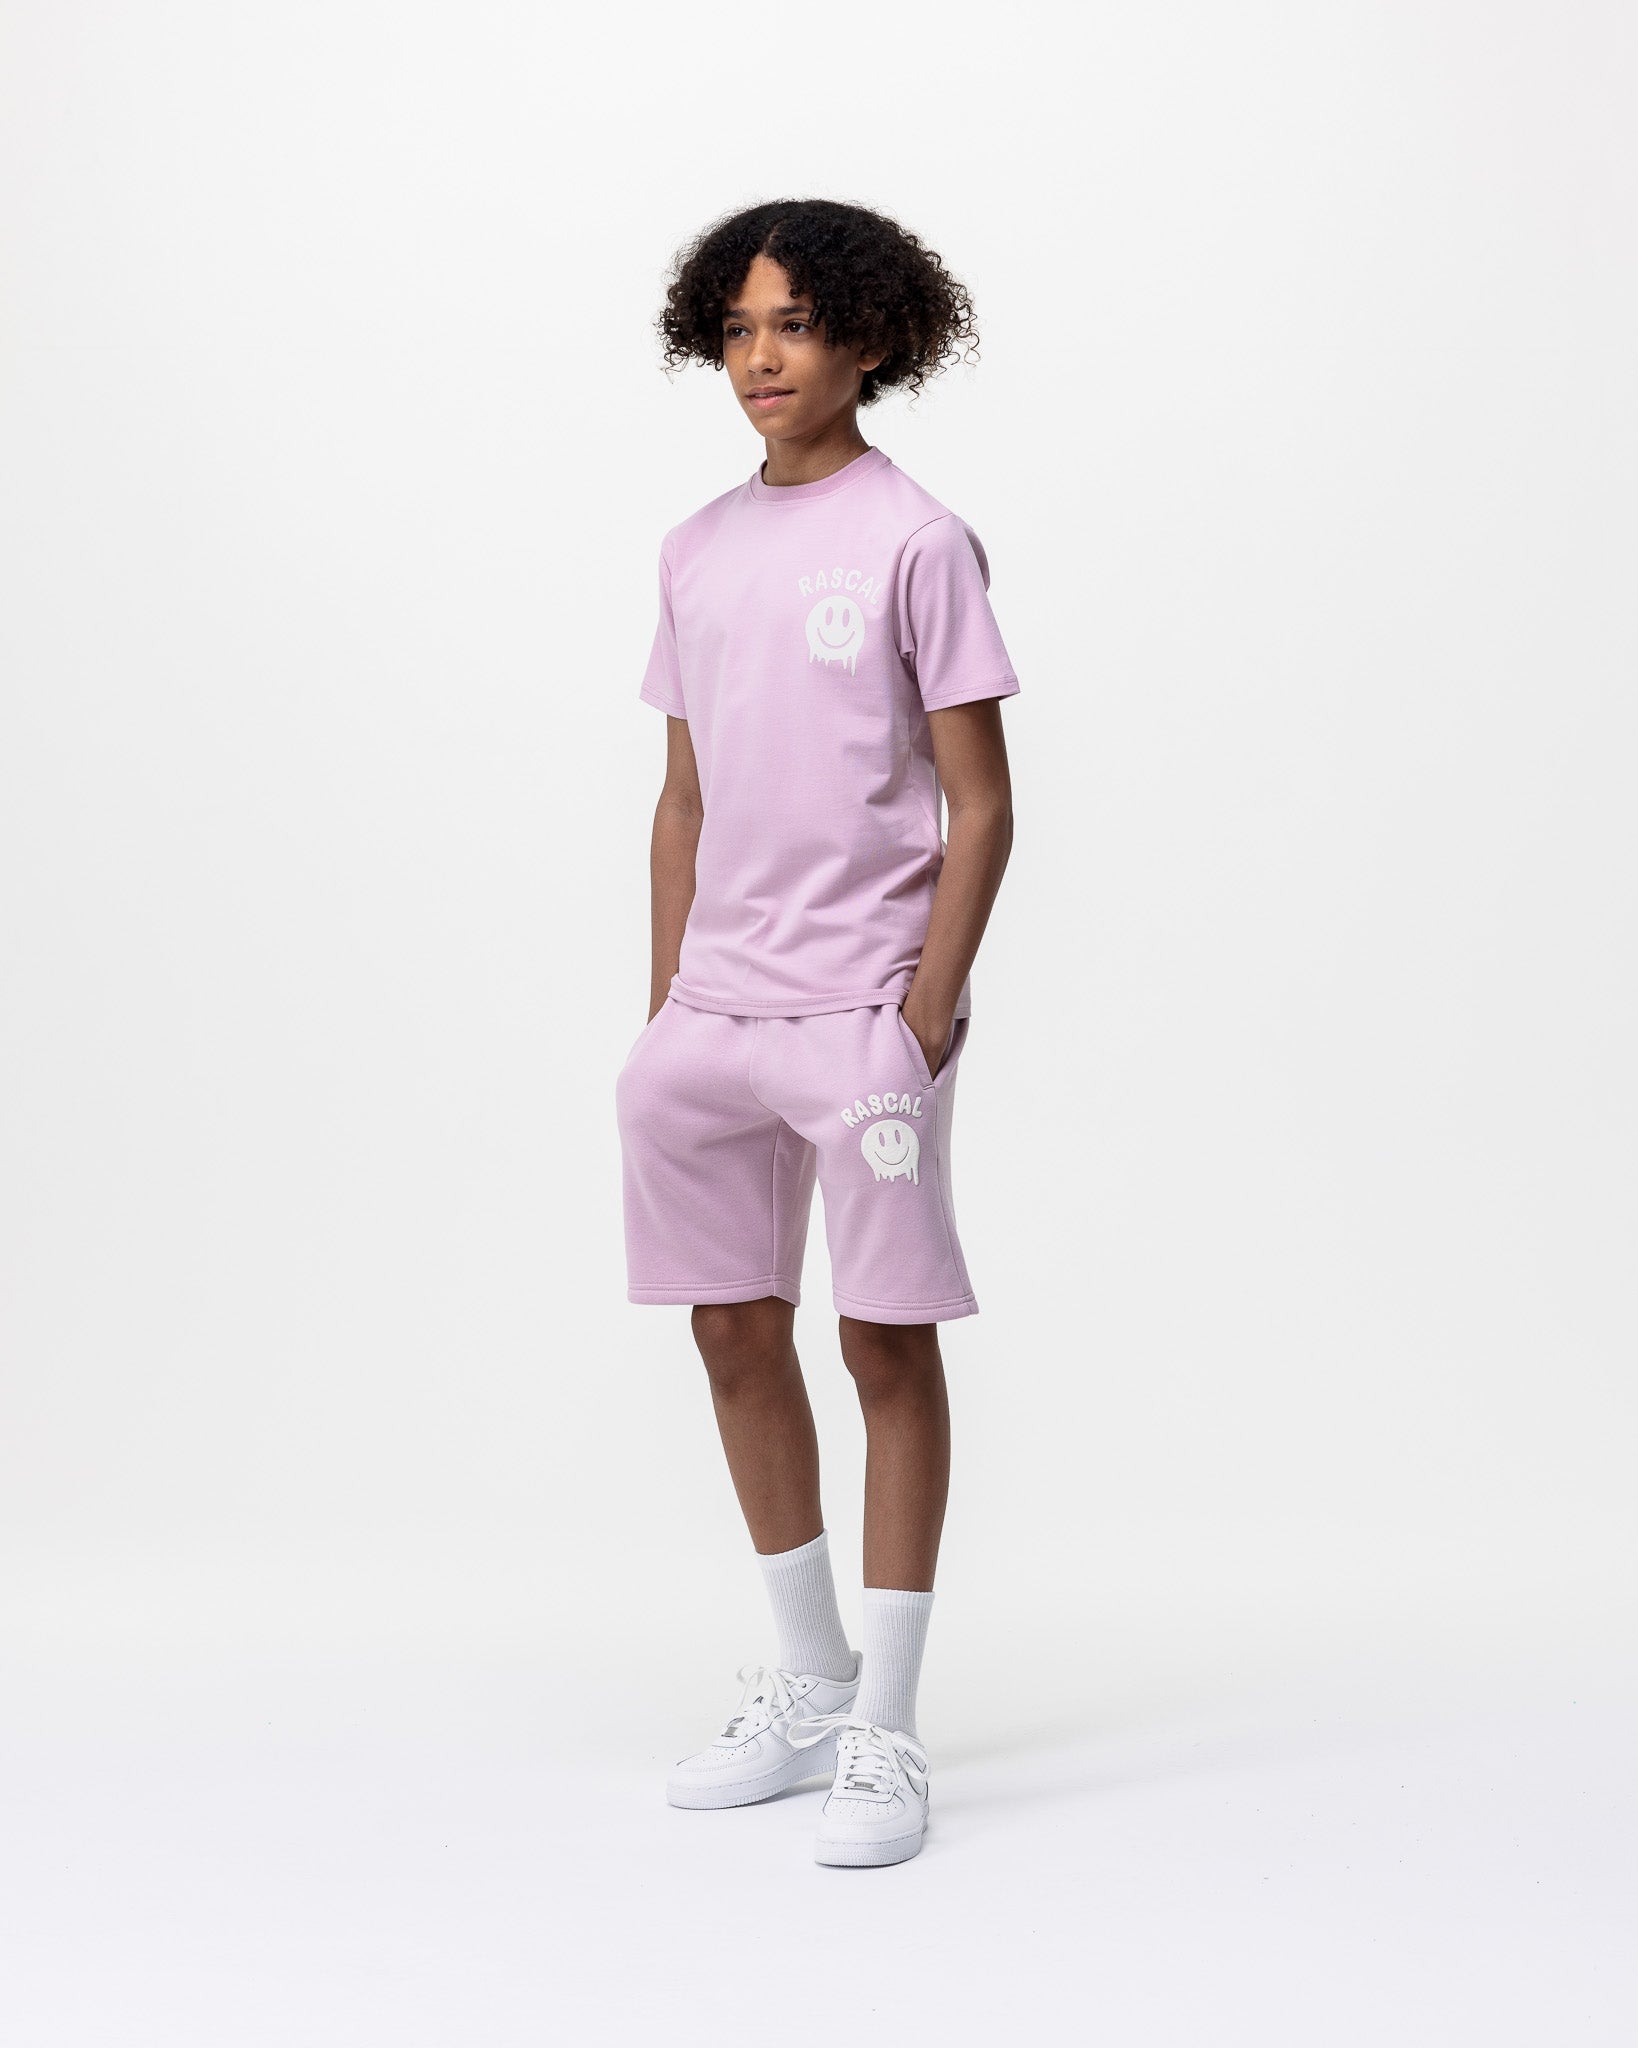 boy wearing Rascal pink smiley tshirt and pink jogger smiley face shorts